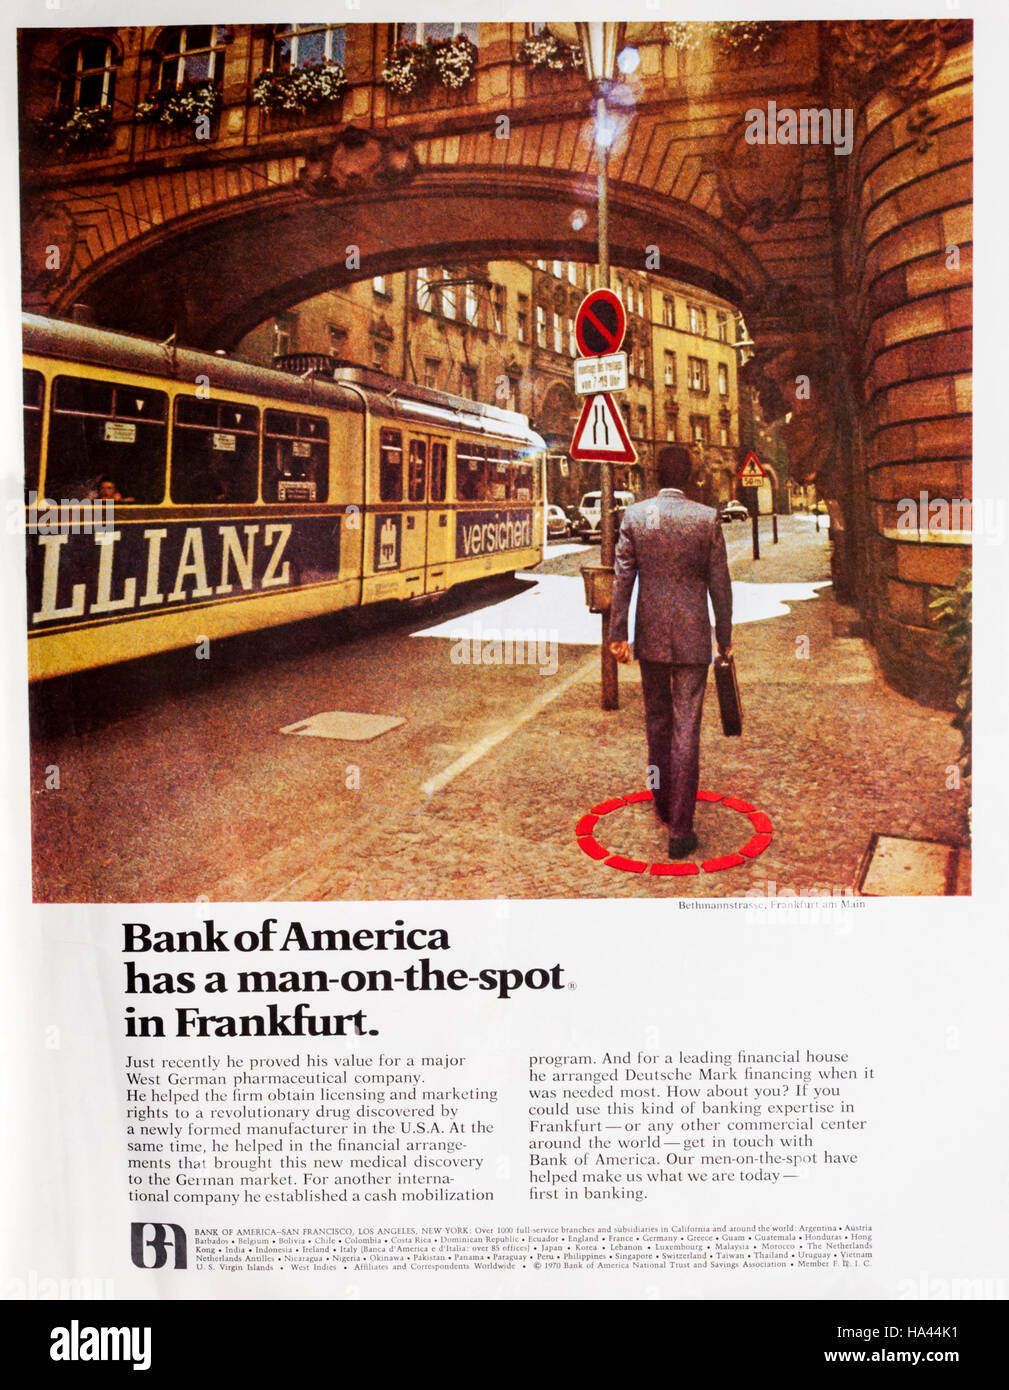 1970s magazine advertisement advertising Bank of America. Stock Photo